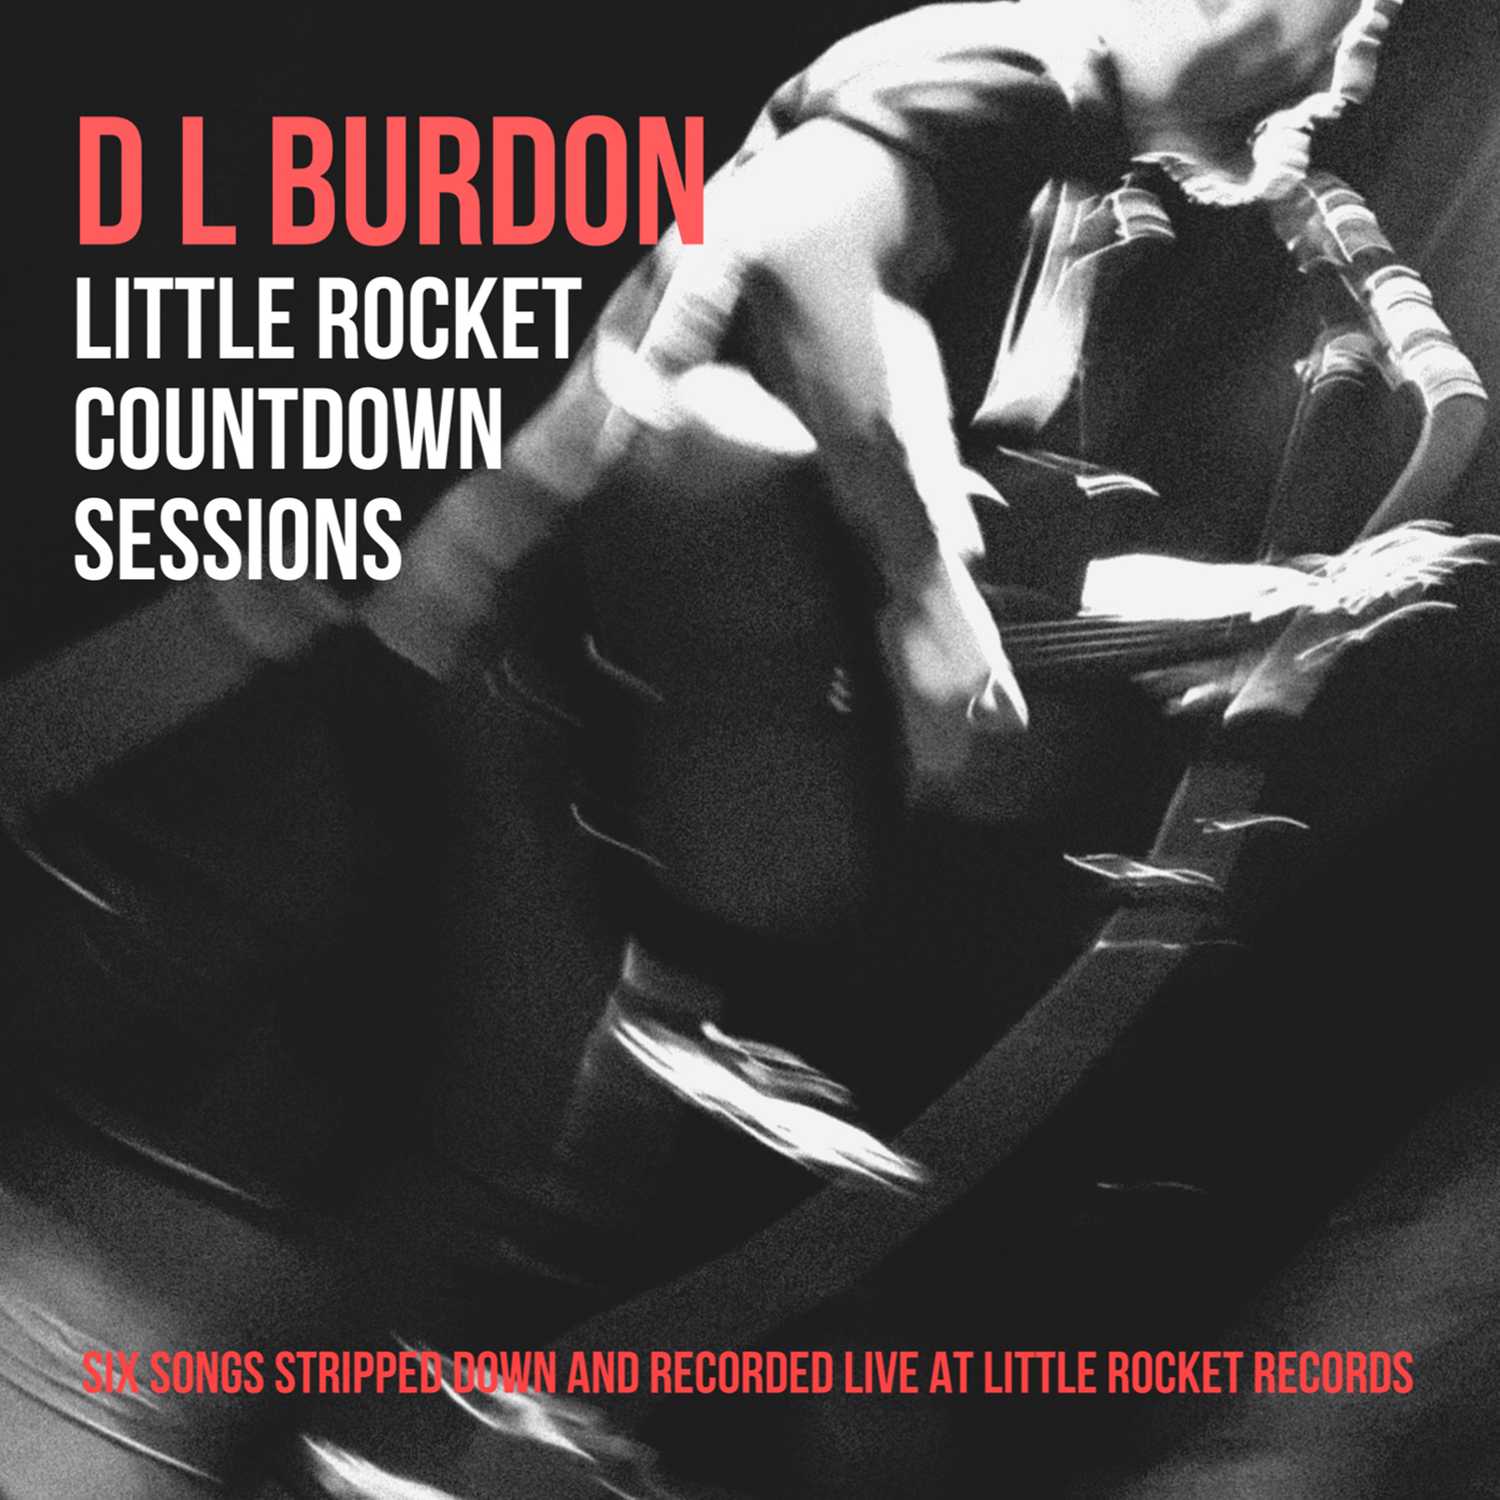 The Count Down Sessions - D L Burdon